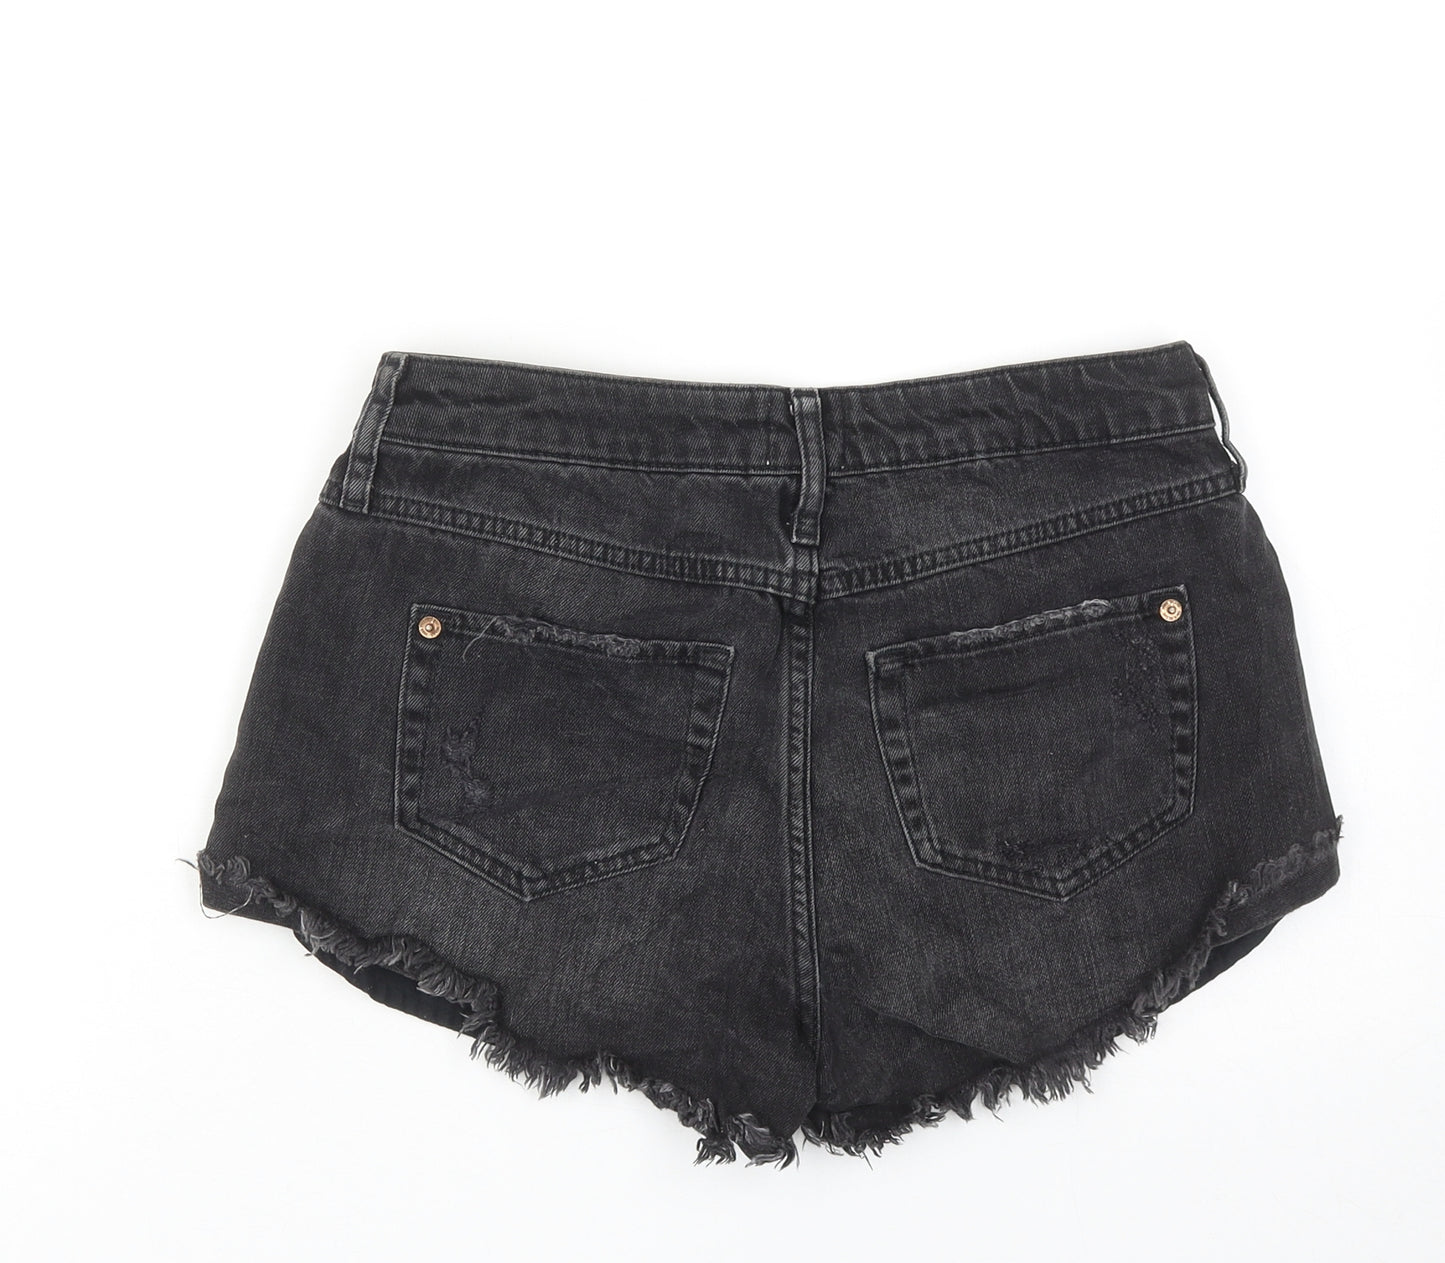 River Island Womens Black Cotton Hot Pants Shorts Size 8 Regular Zip - Distressed